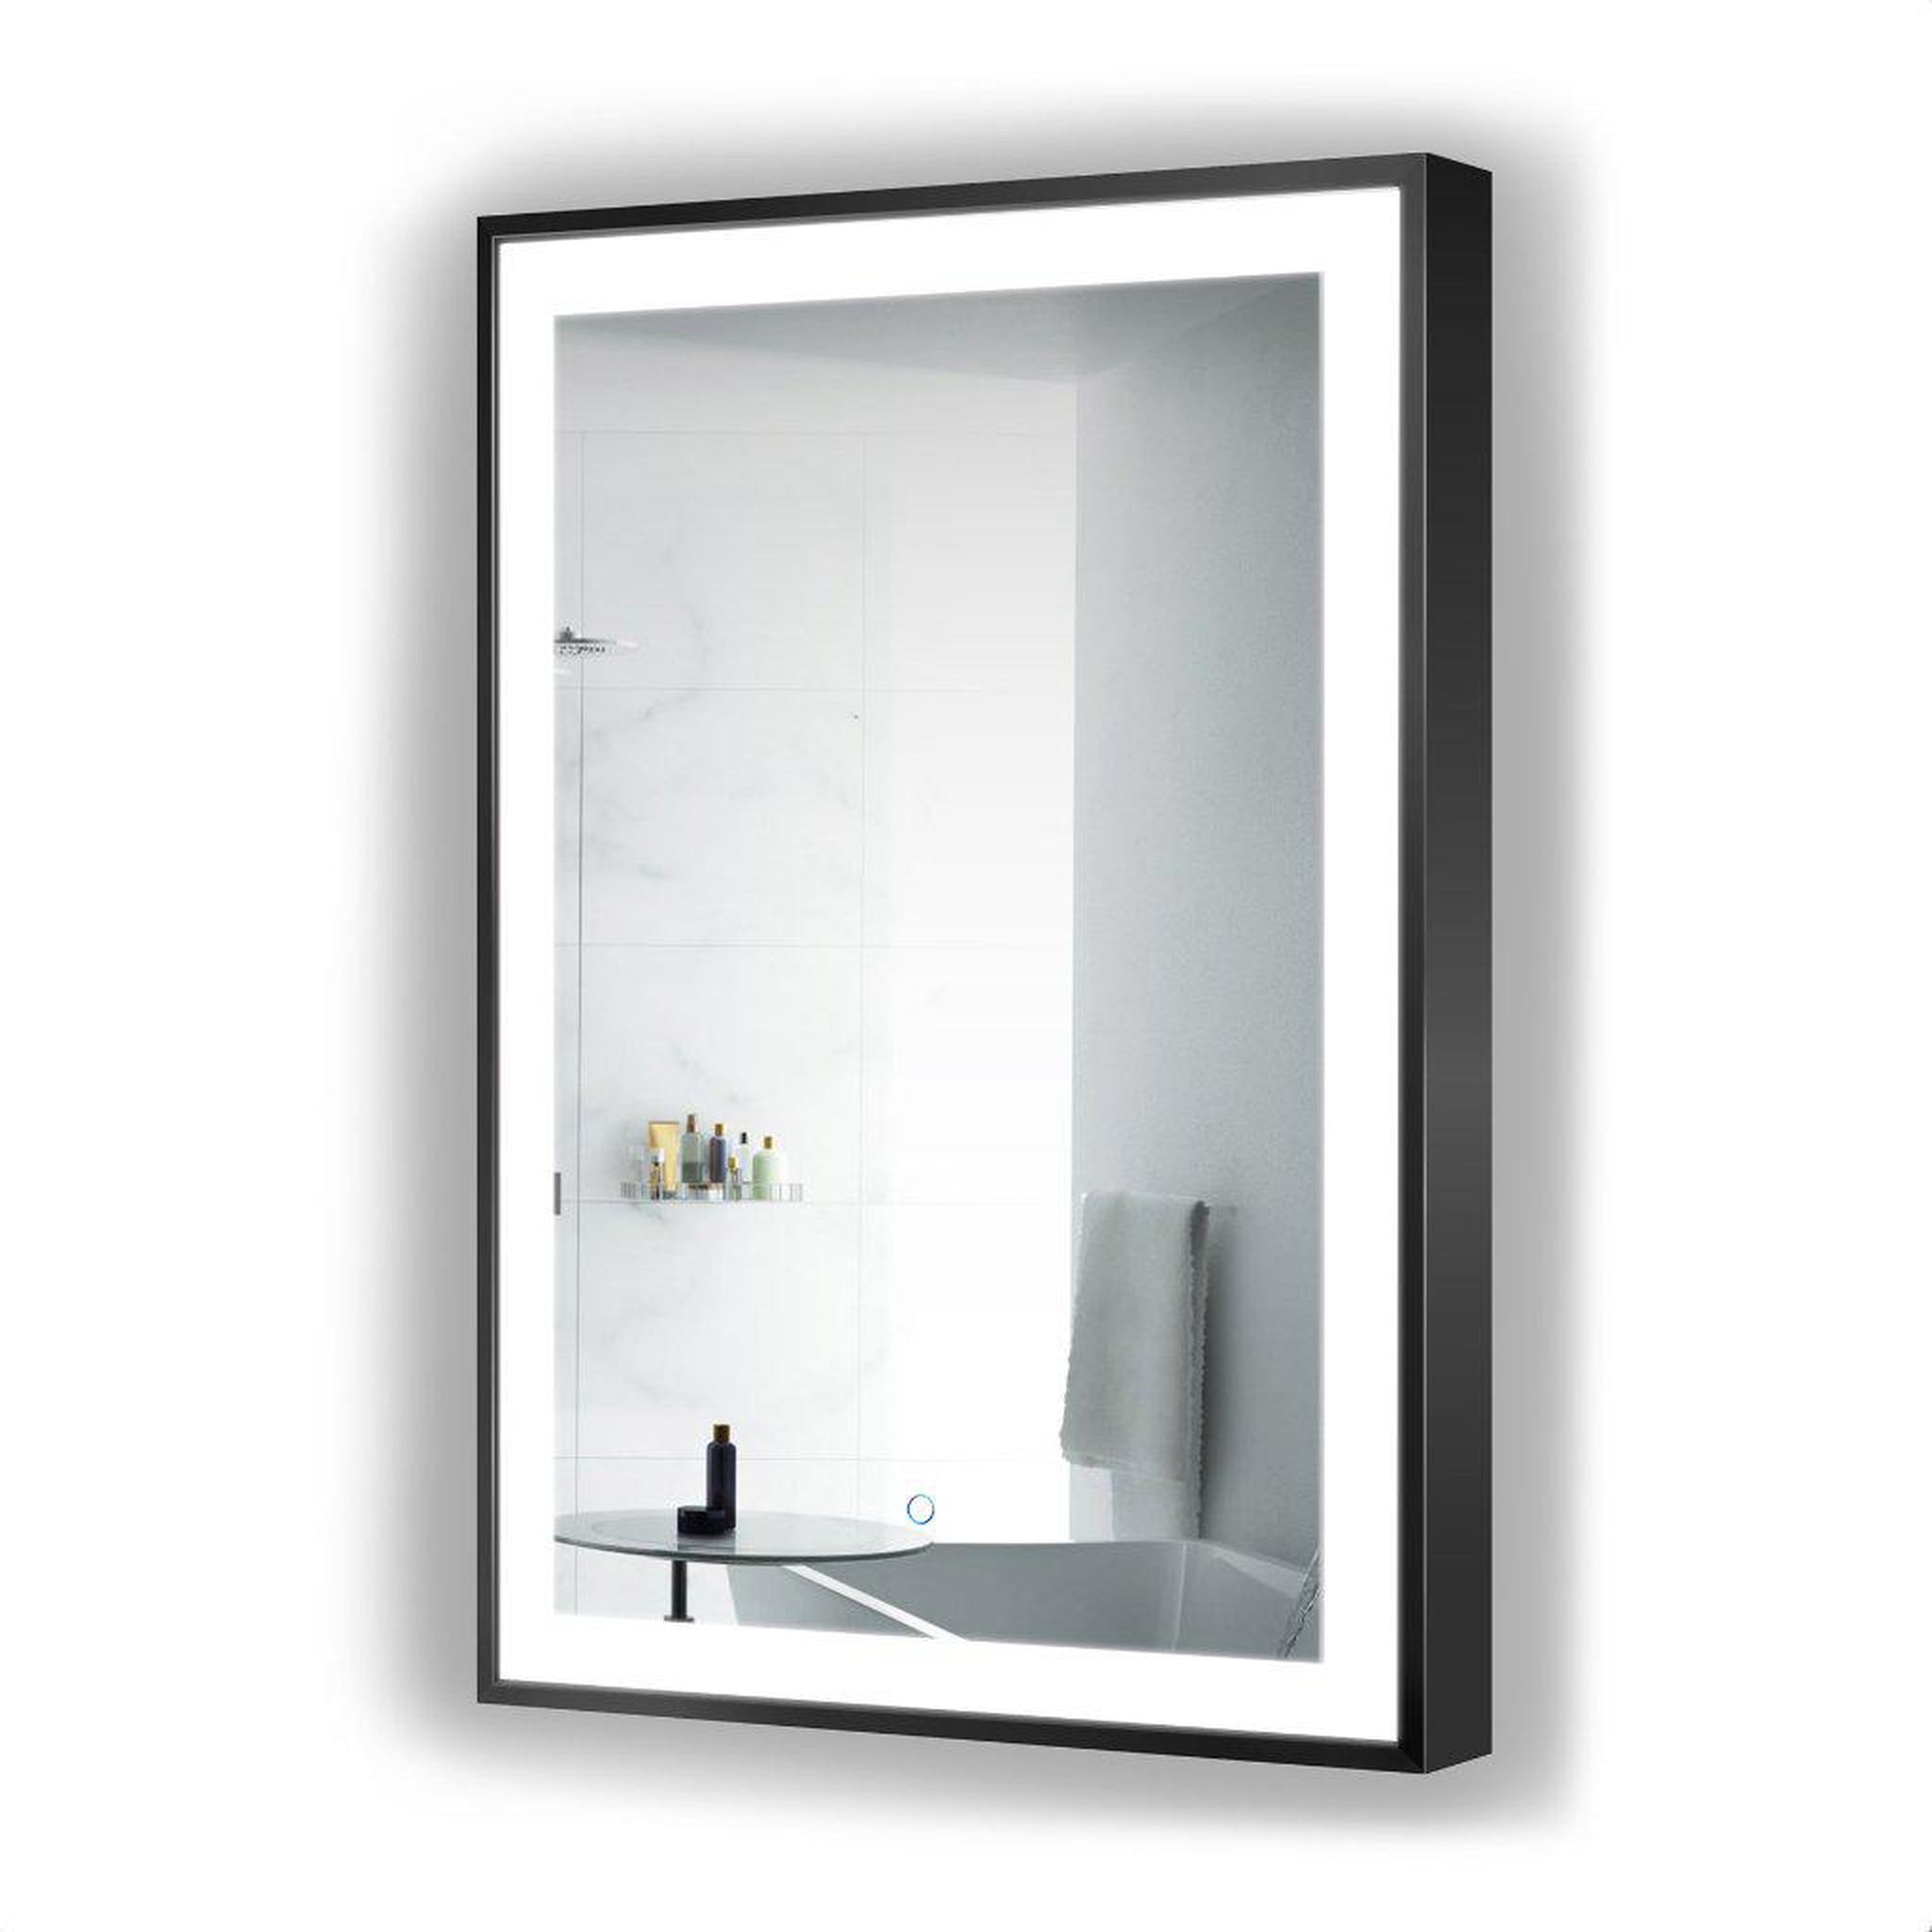 Krugg Reflections, Krugg Reflections Soho 24" x 36" 5000K Rectangular Matte Black Wall-Mounted Framed LED Bathroom Vanity Mirror With Built-in Defogger and Dimmer